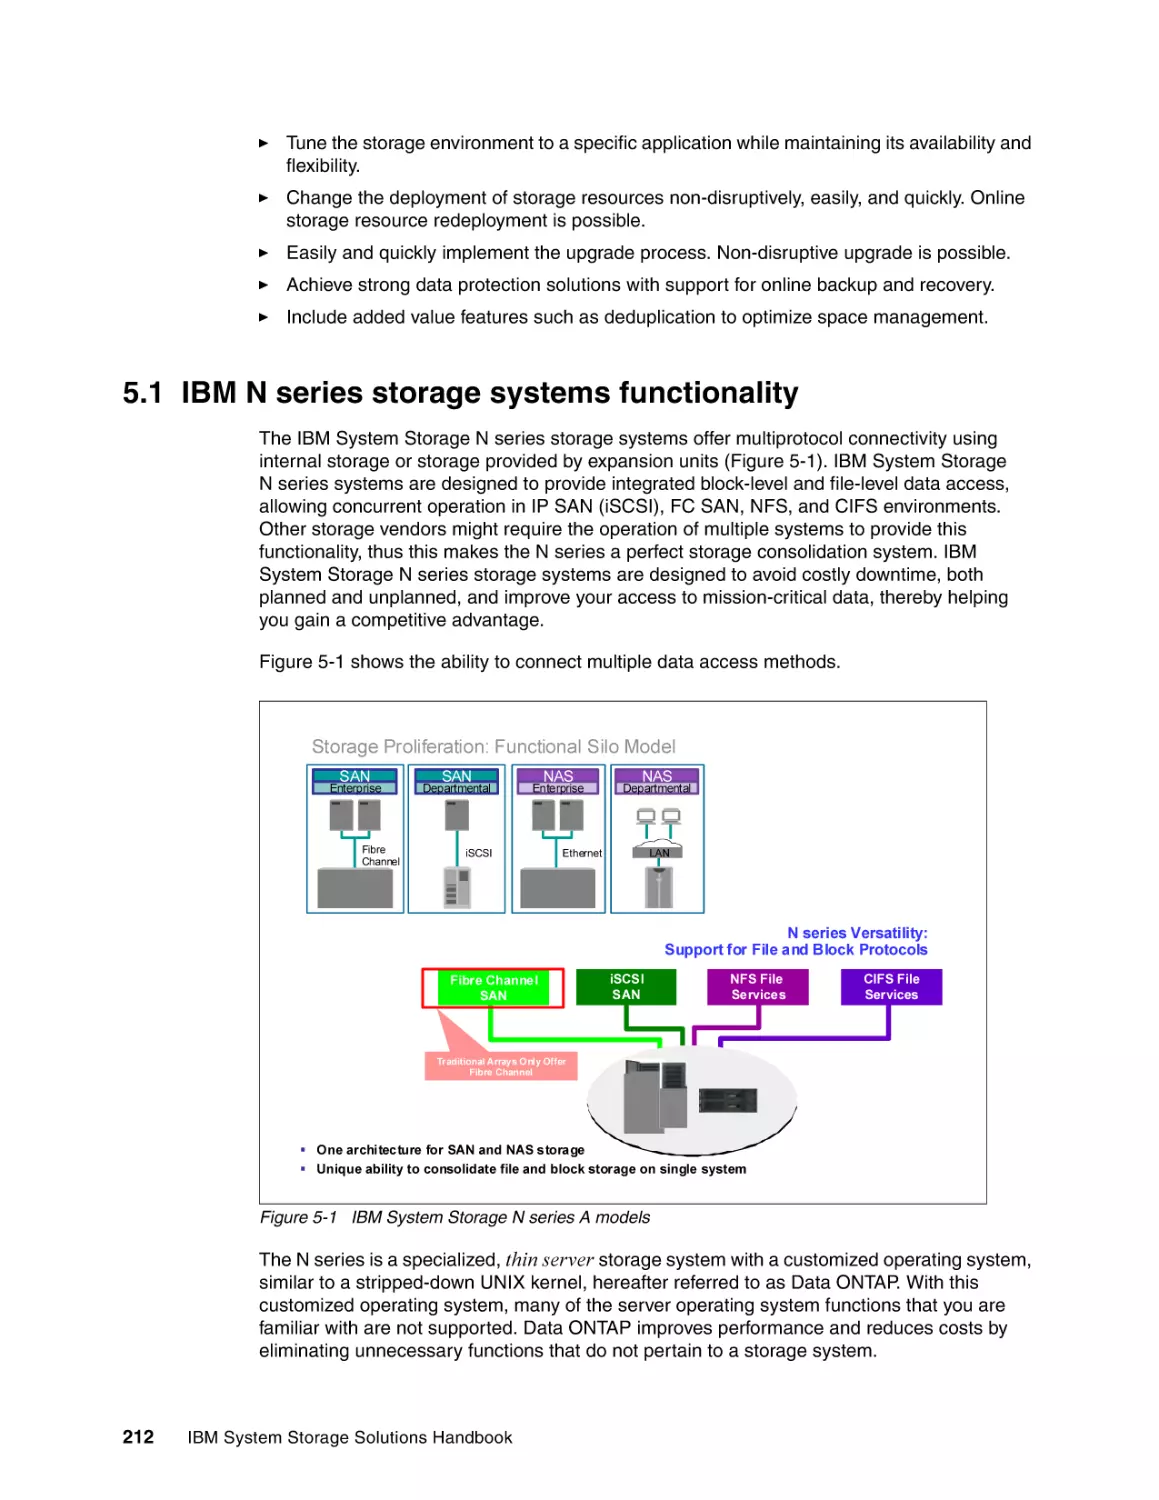 5.1 IBM N series storage systems functionality